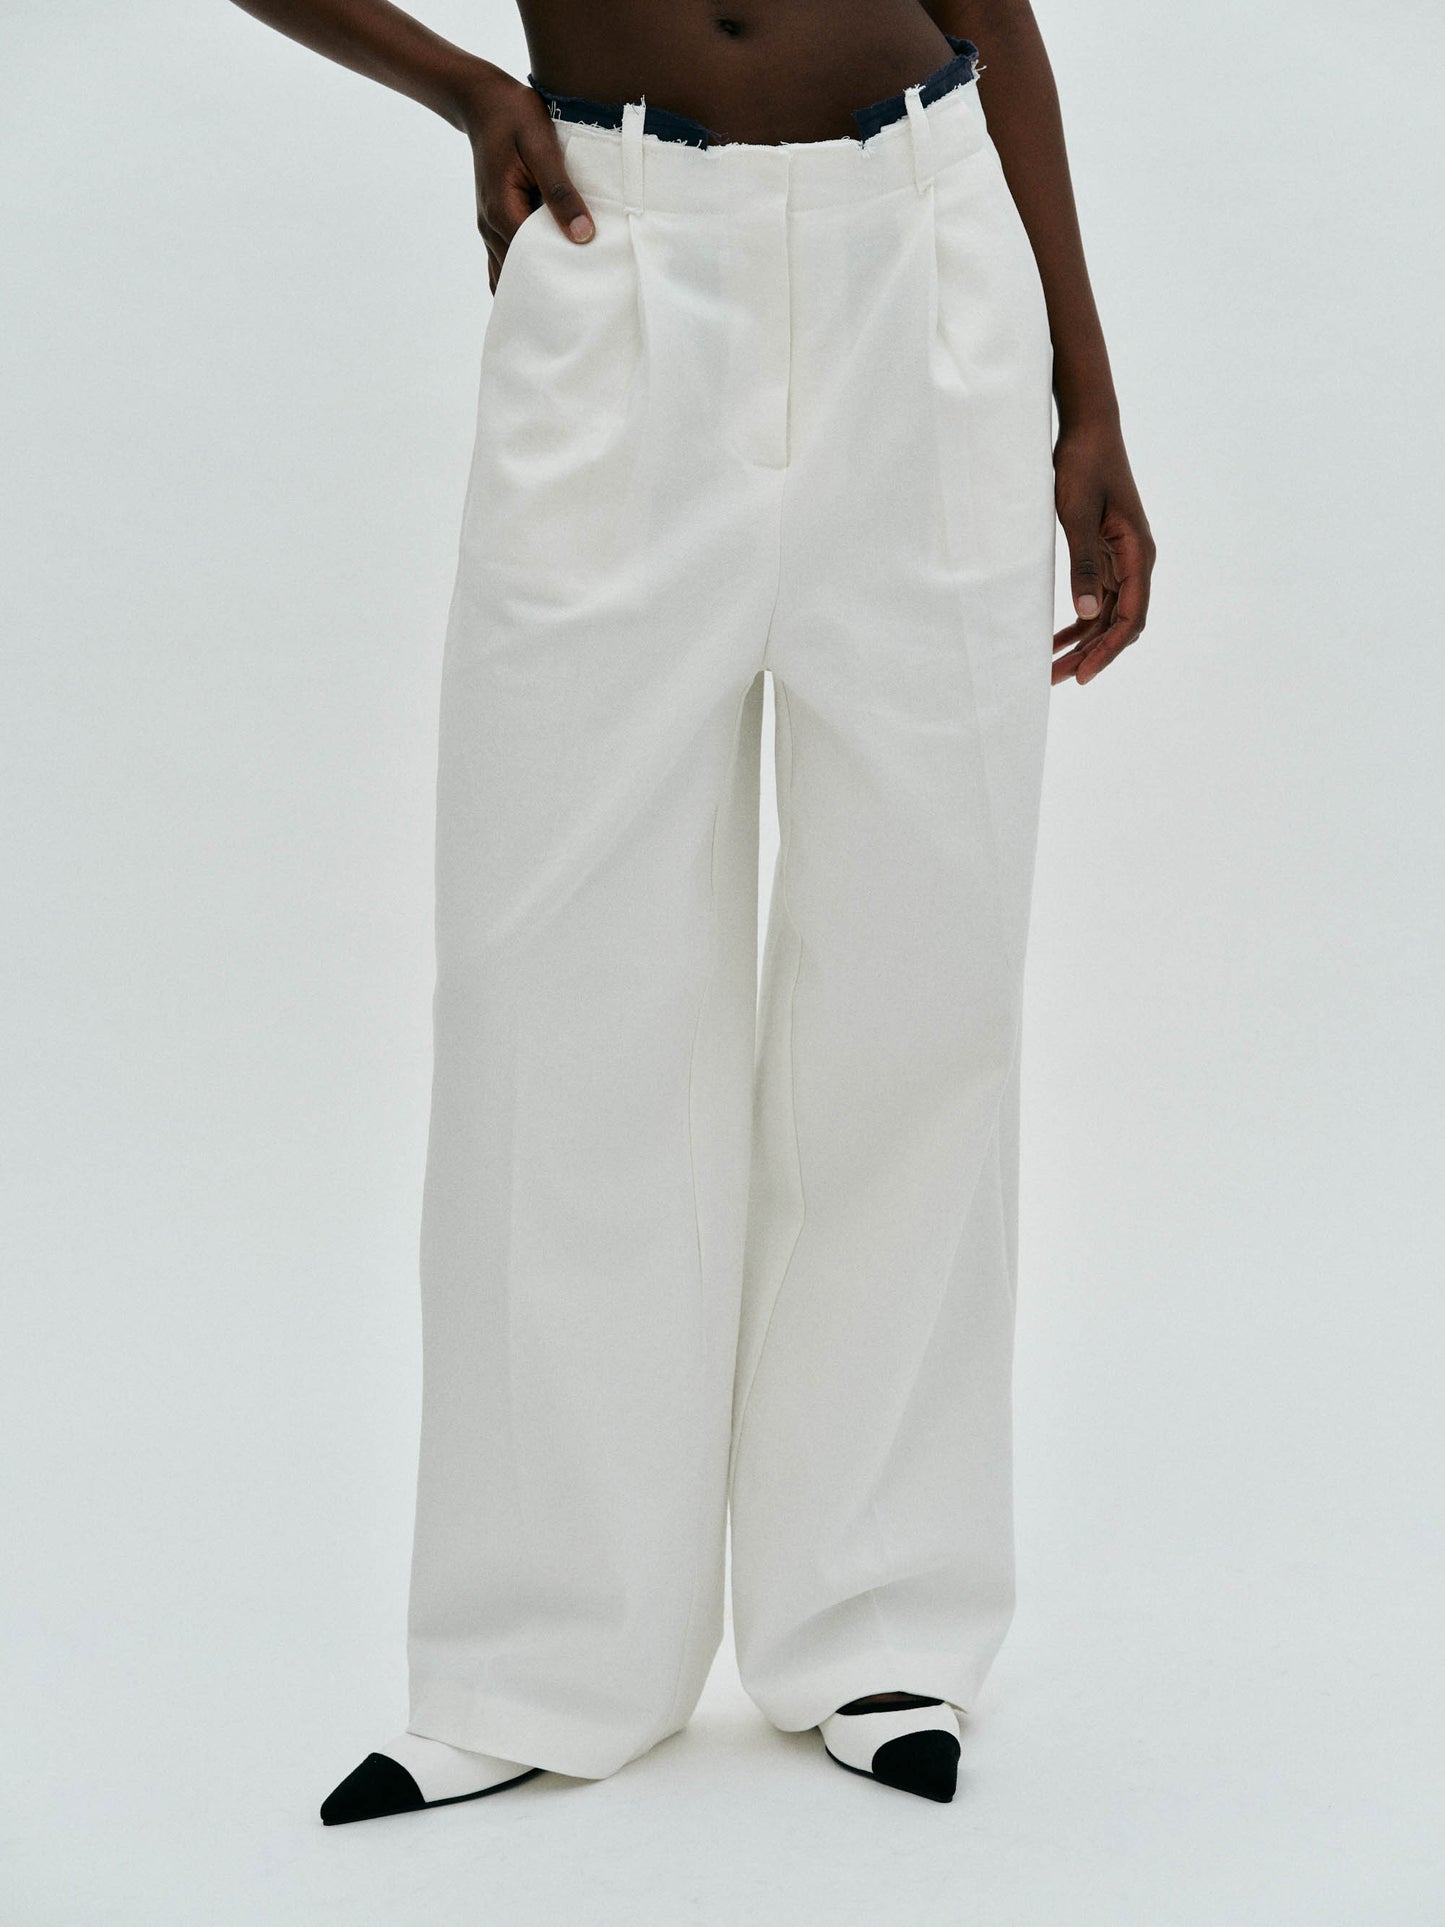 Contrast Raw Waist Pants, White